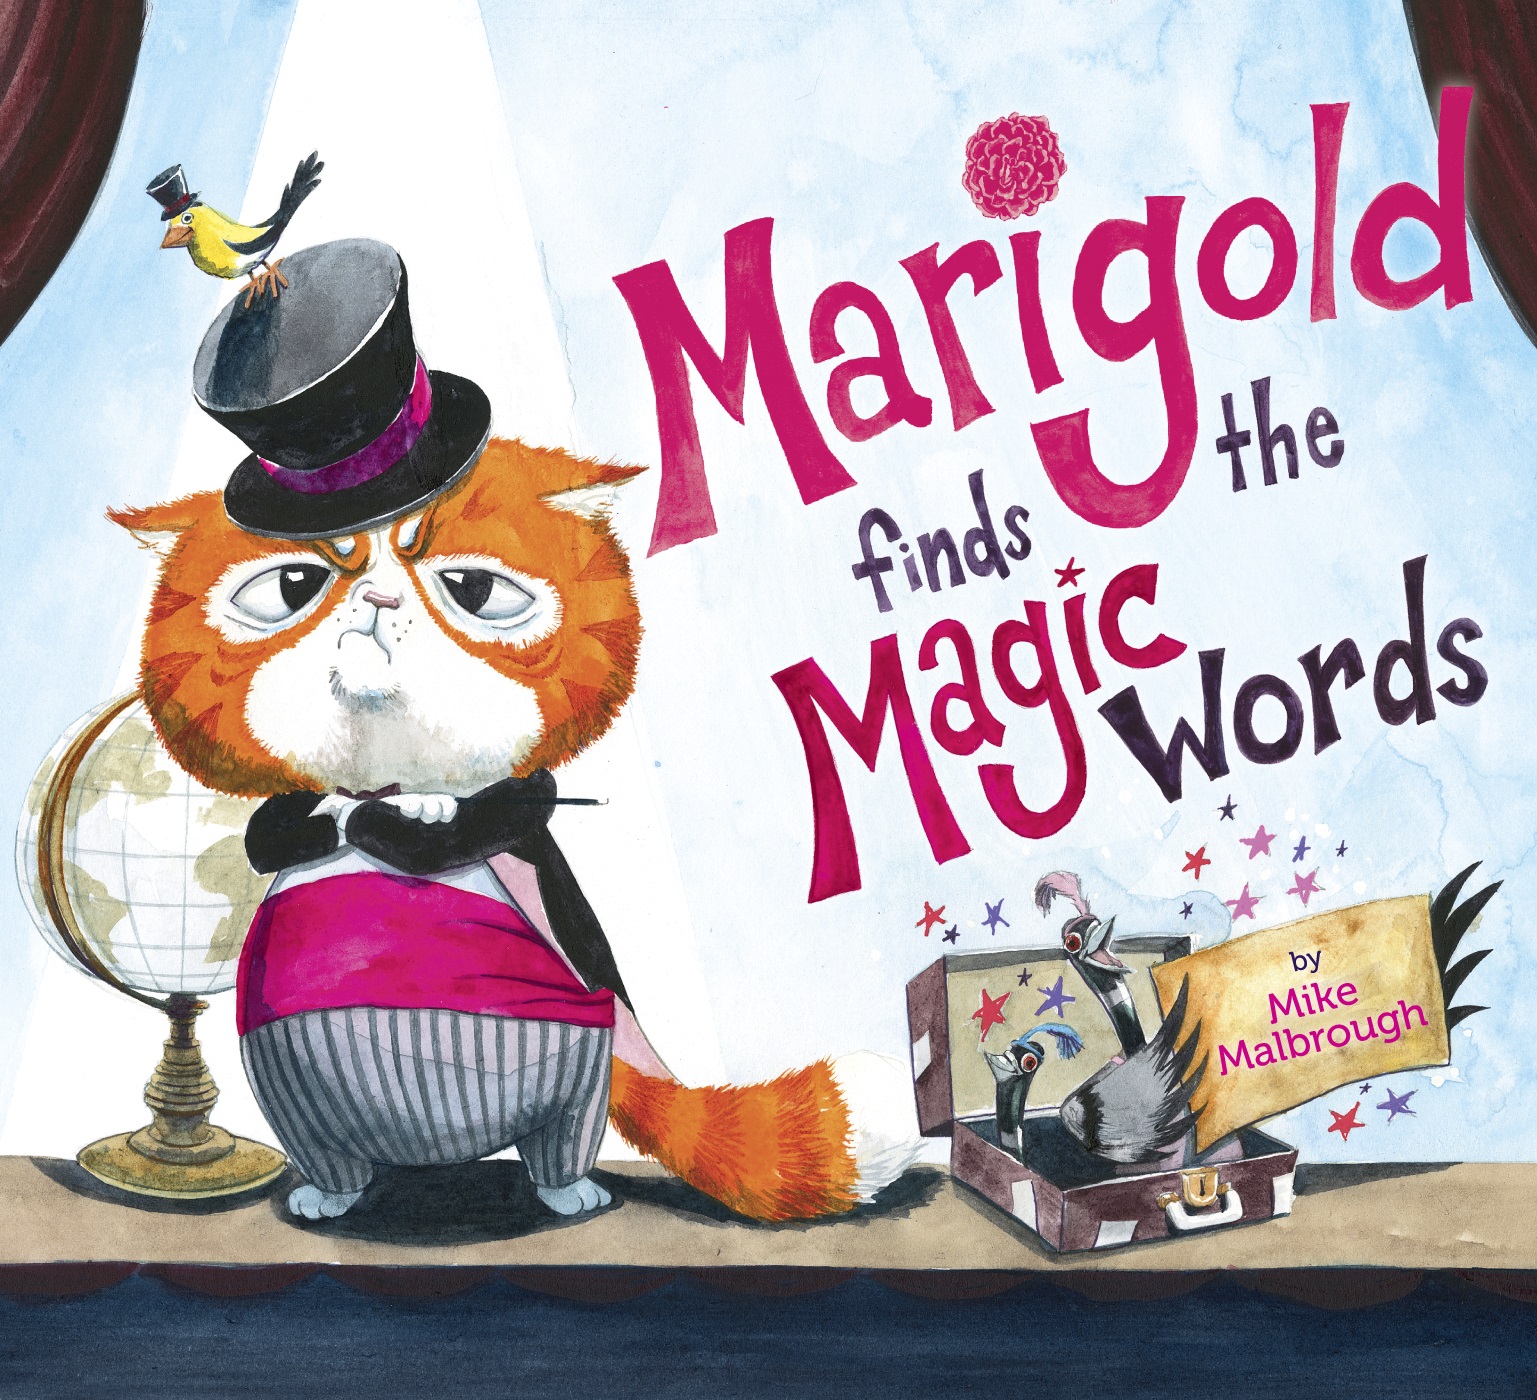 Malbrough, Mike 2019_03 MARIGOLD FINDS THE MAGIC WORDS - PB LKLA.jpg